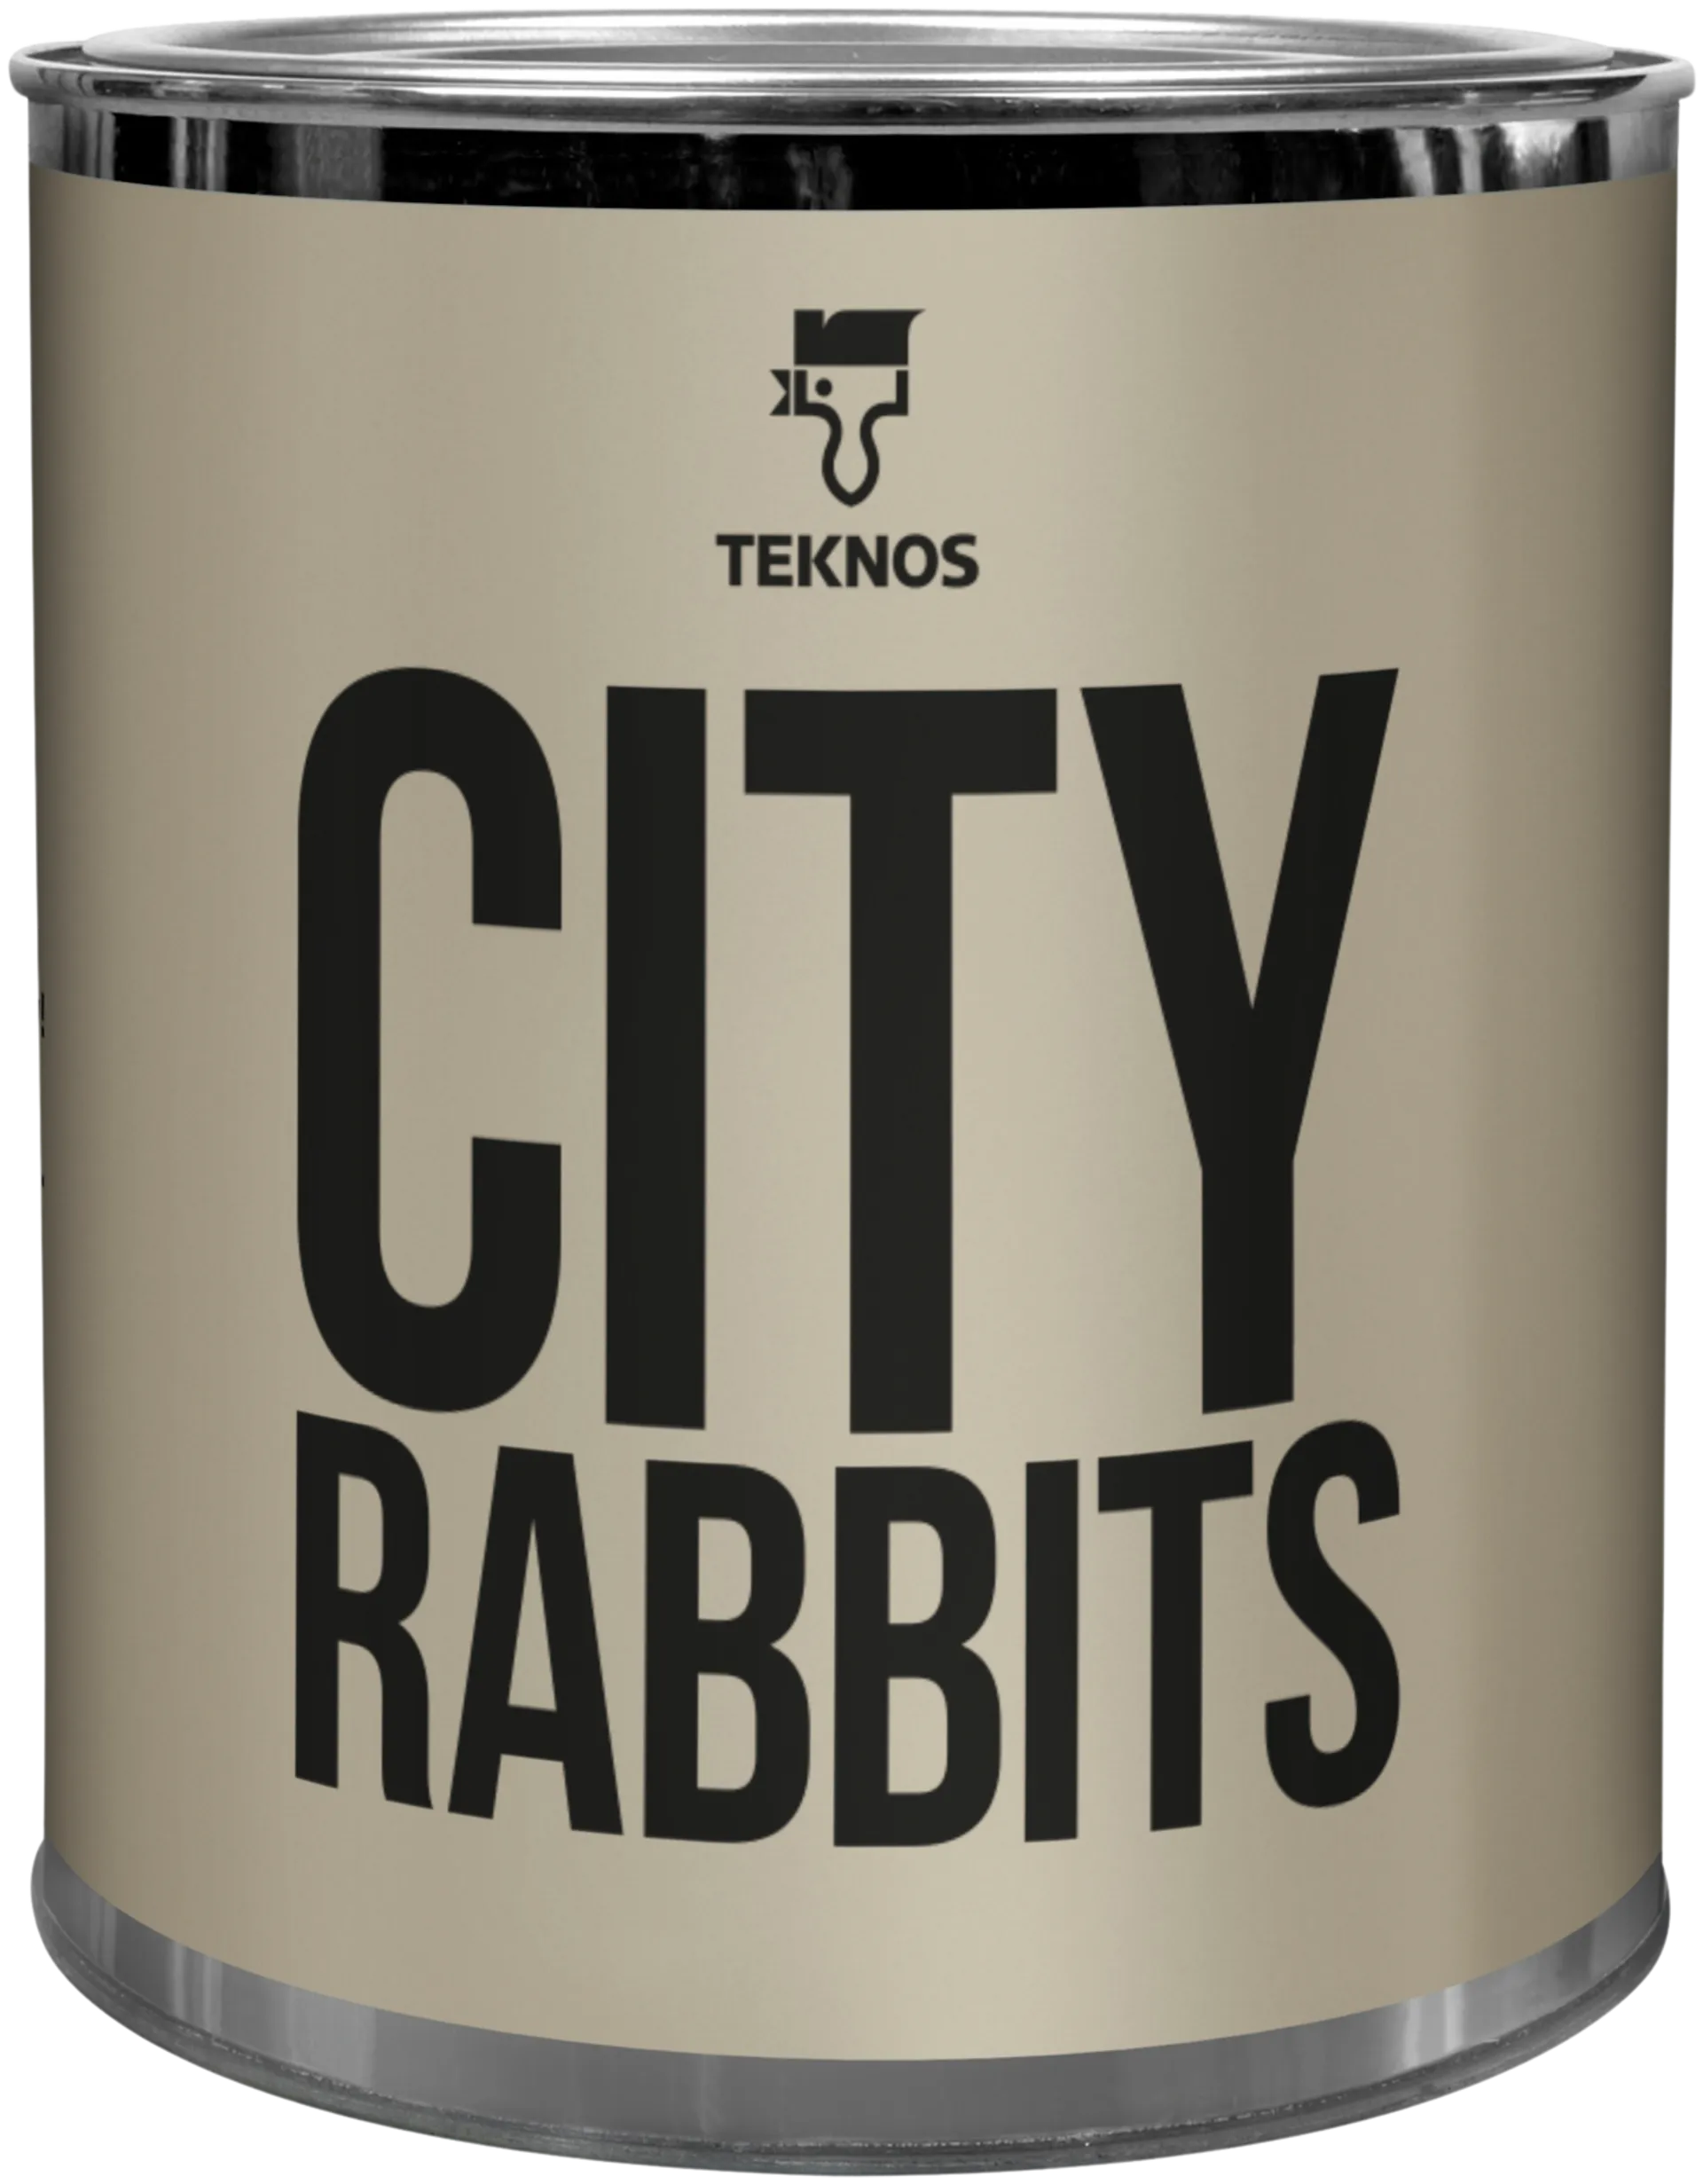 Teknos Colour sample City rabbits T1657